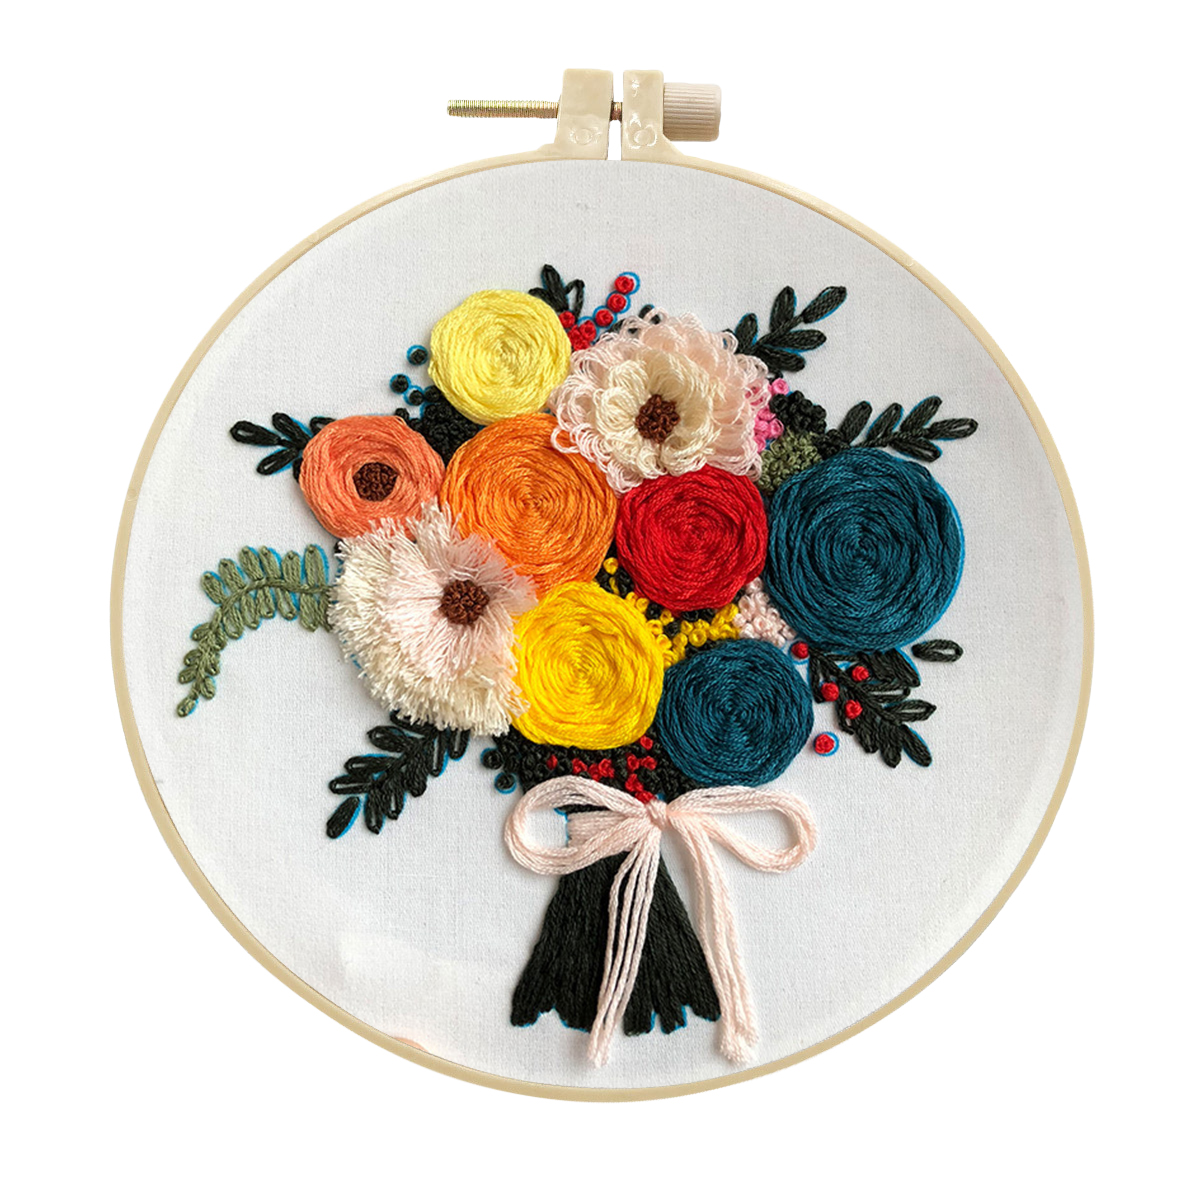 DIY Handmade Embroidery Kit Craft Cross Stitch Kits Beginner - Prosperity Bouquet Pattern